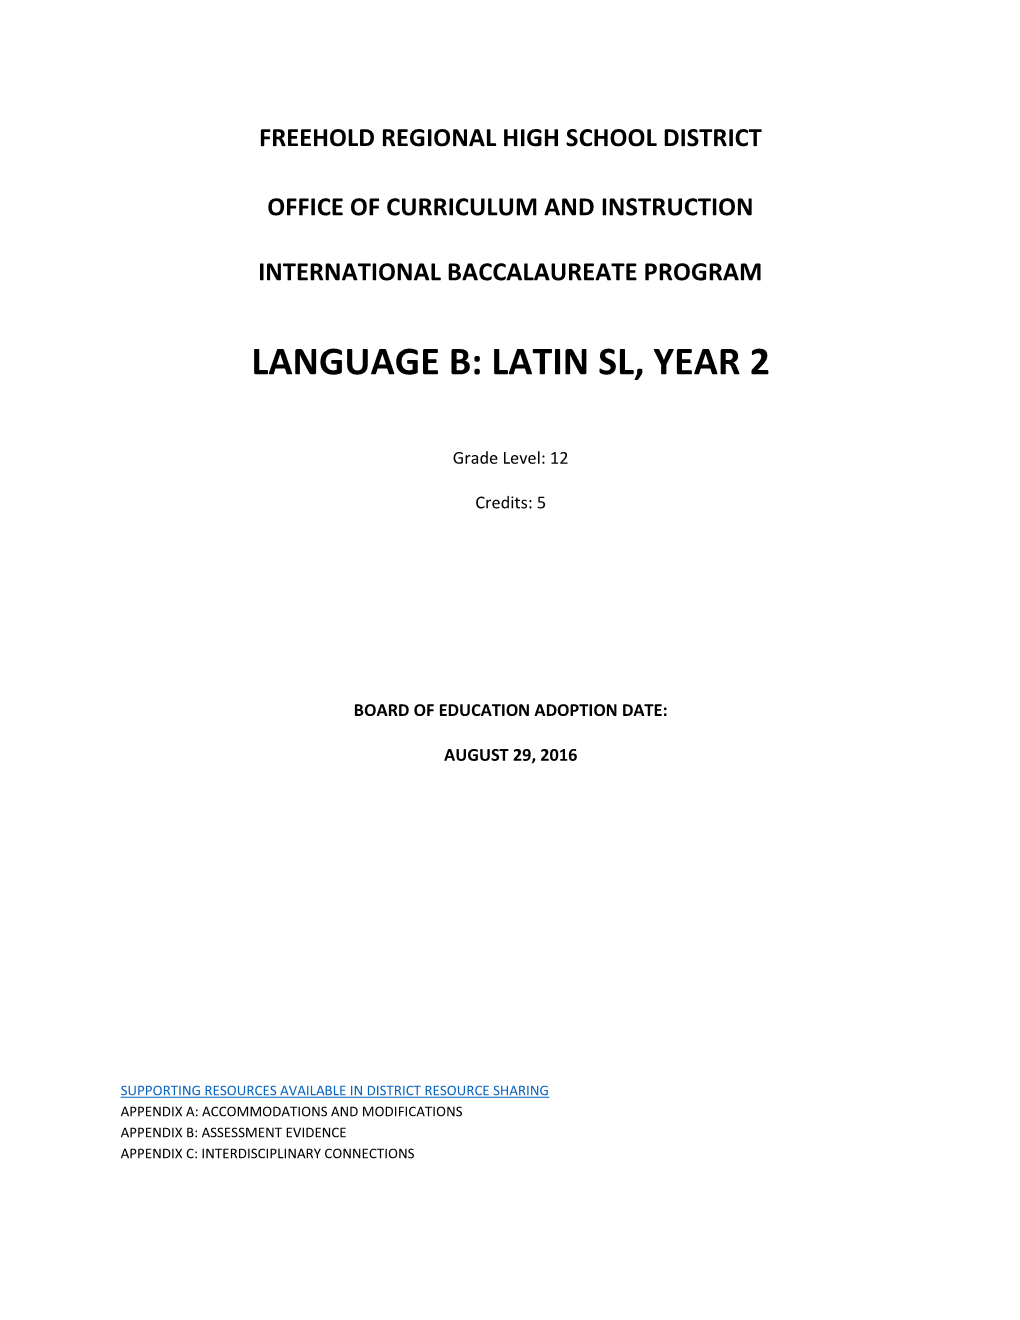 Latin Sl, Year 2